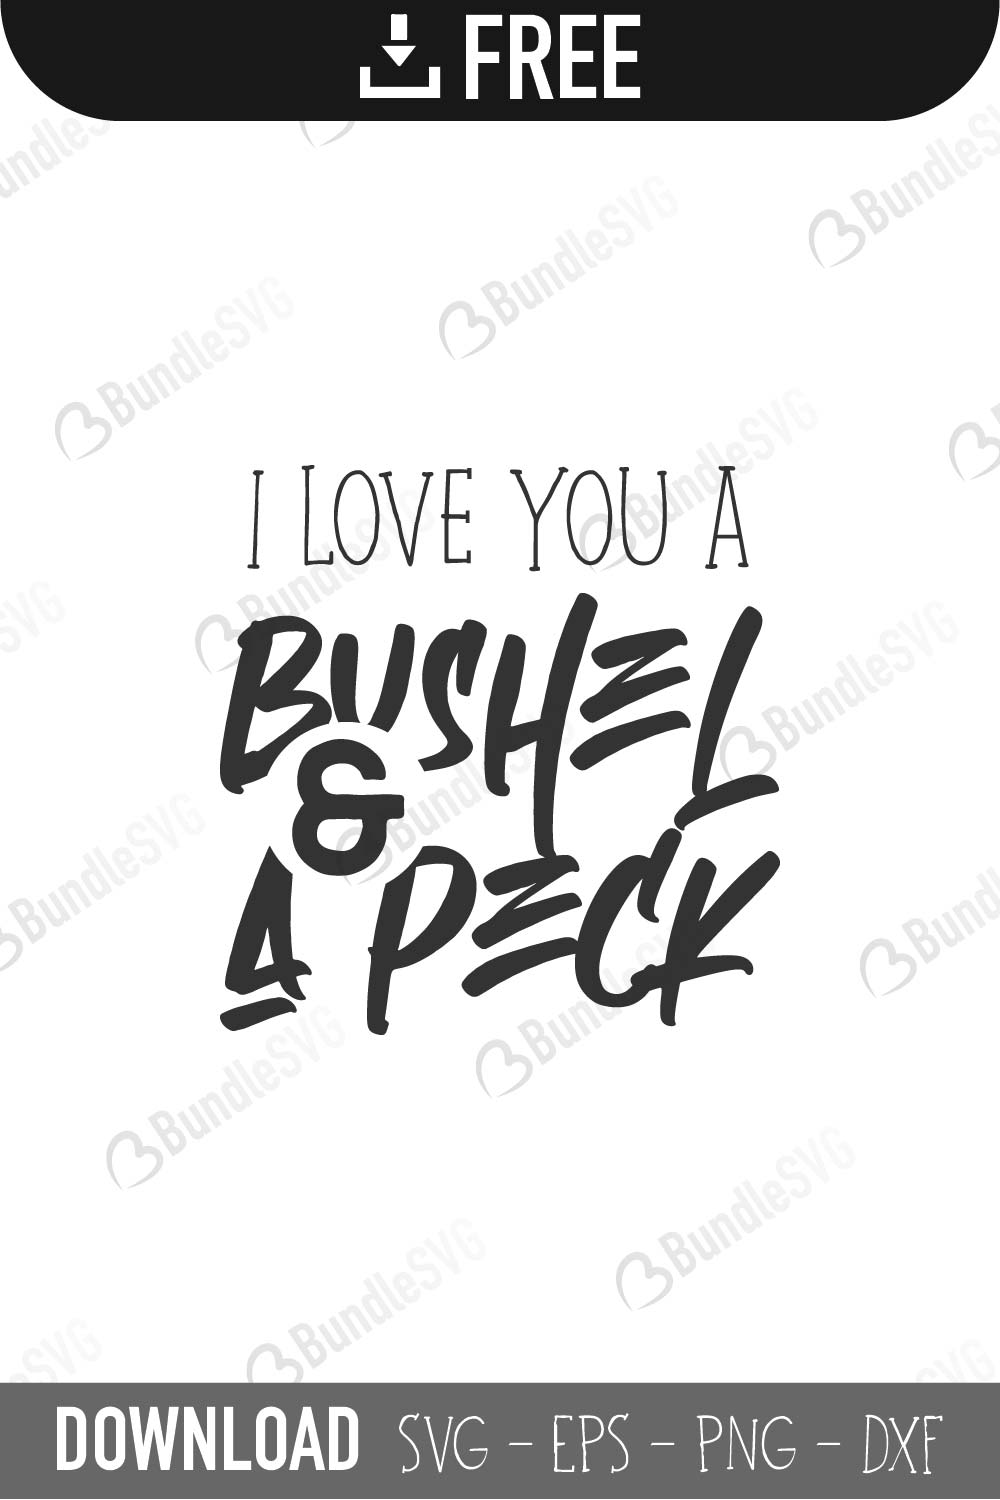 Download Bushel and Peck SVG Cut Files Free Download | BundleSVG